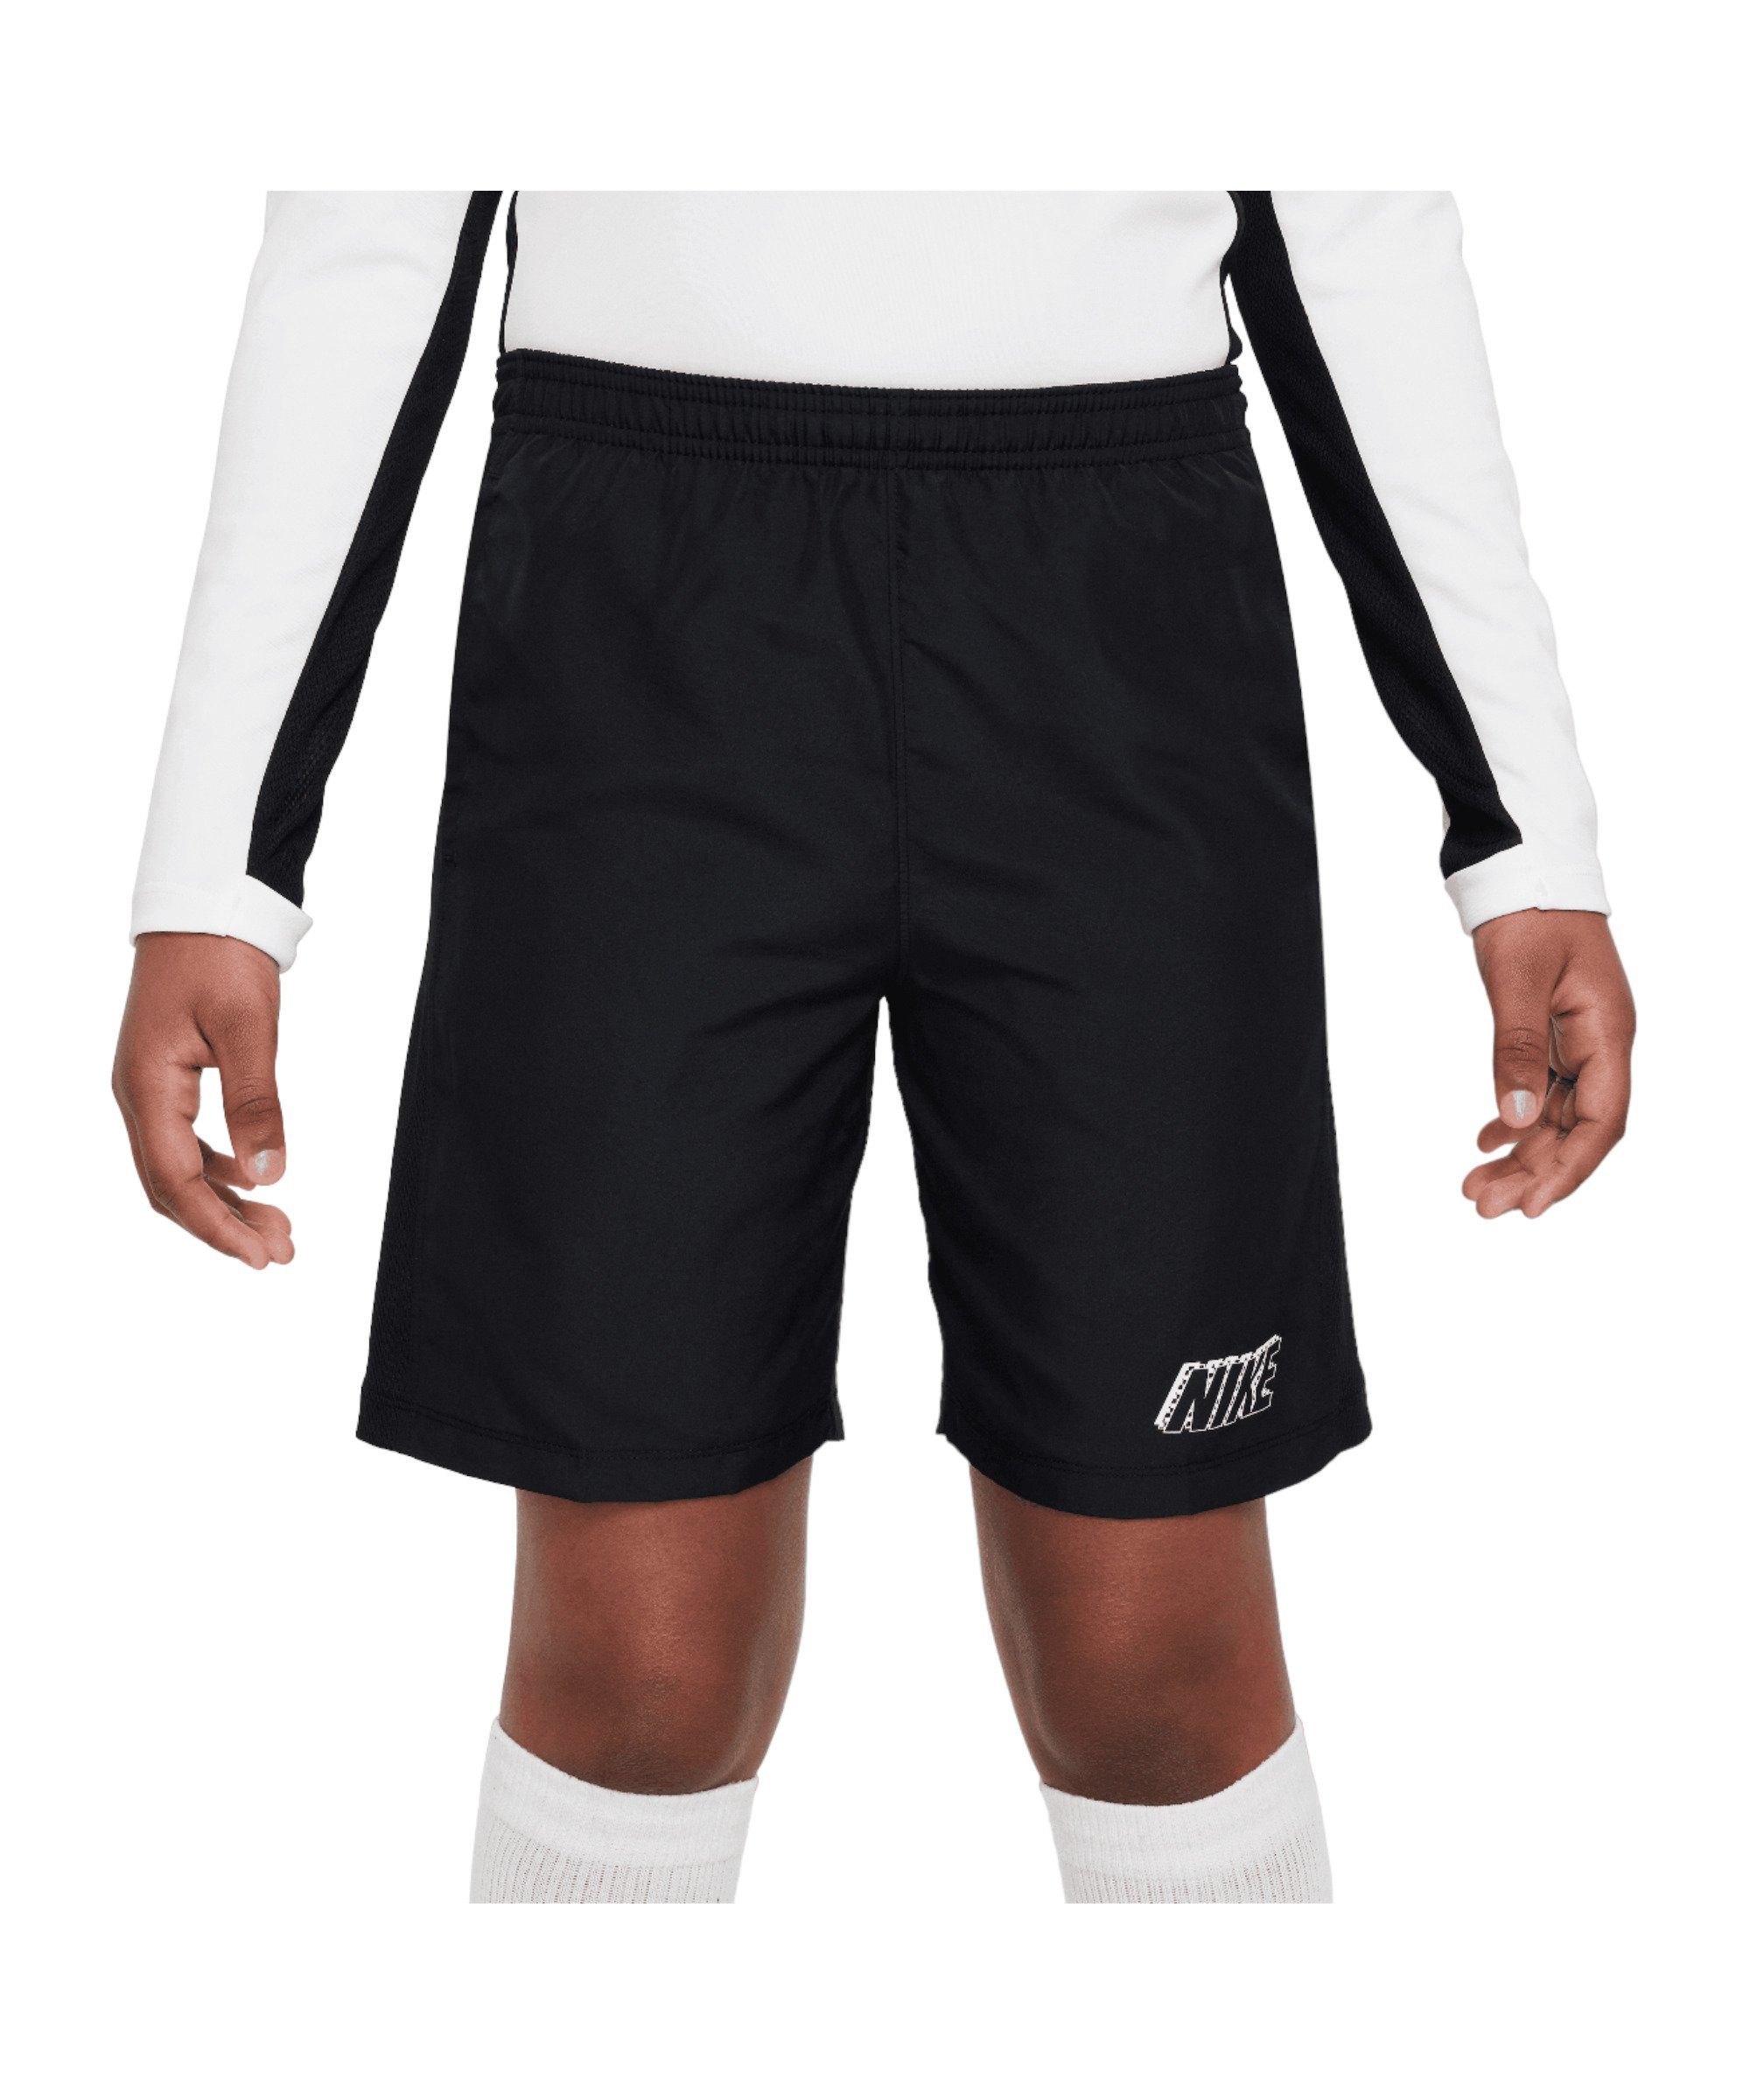 Academy Sporthose Nike Shorts Kids 23